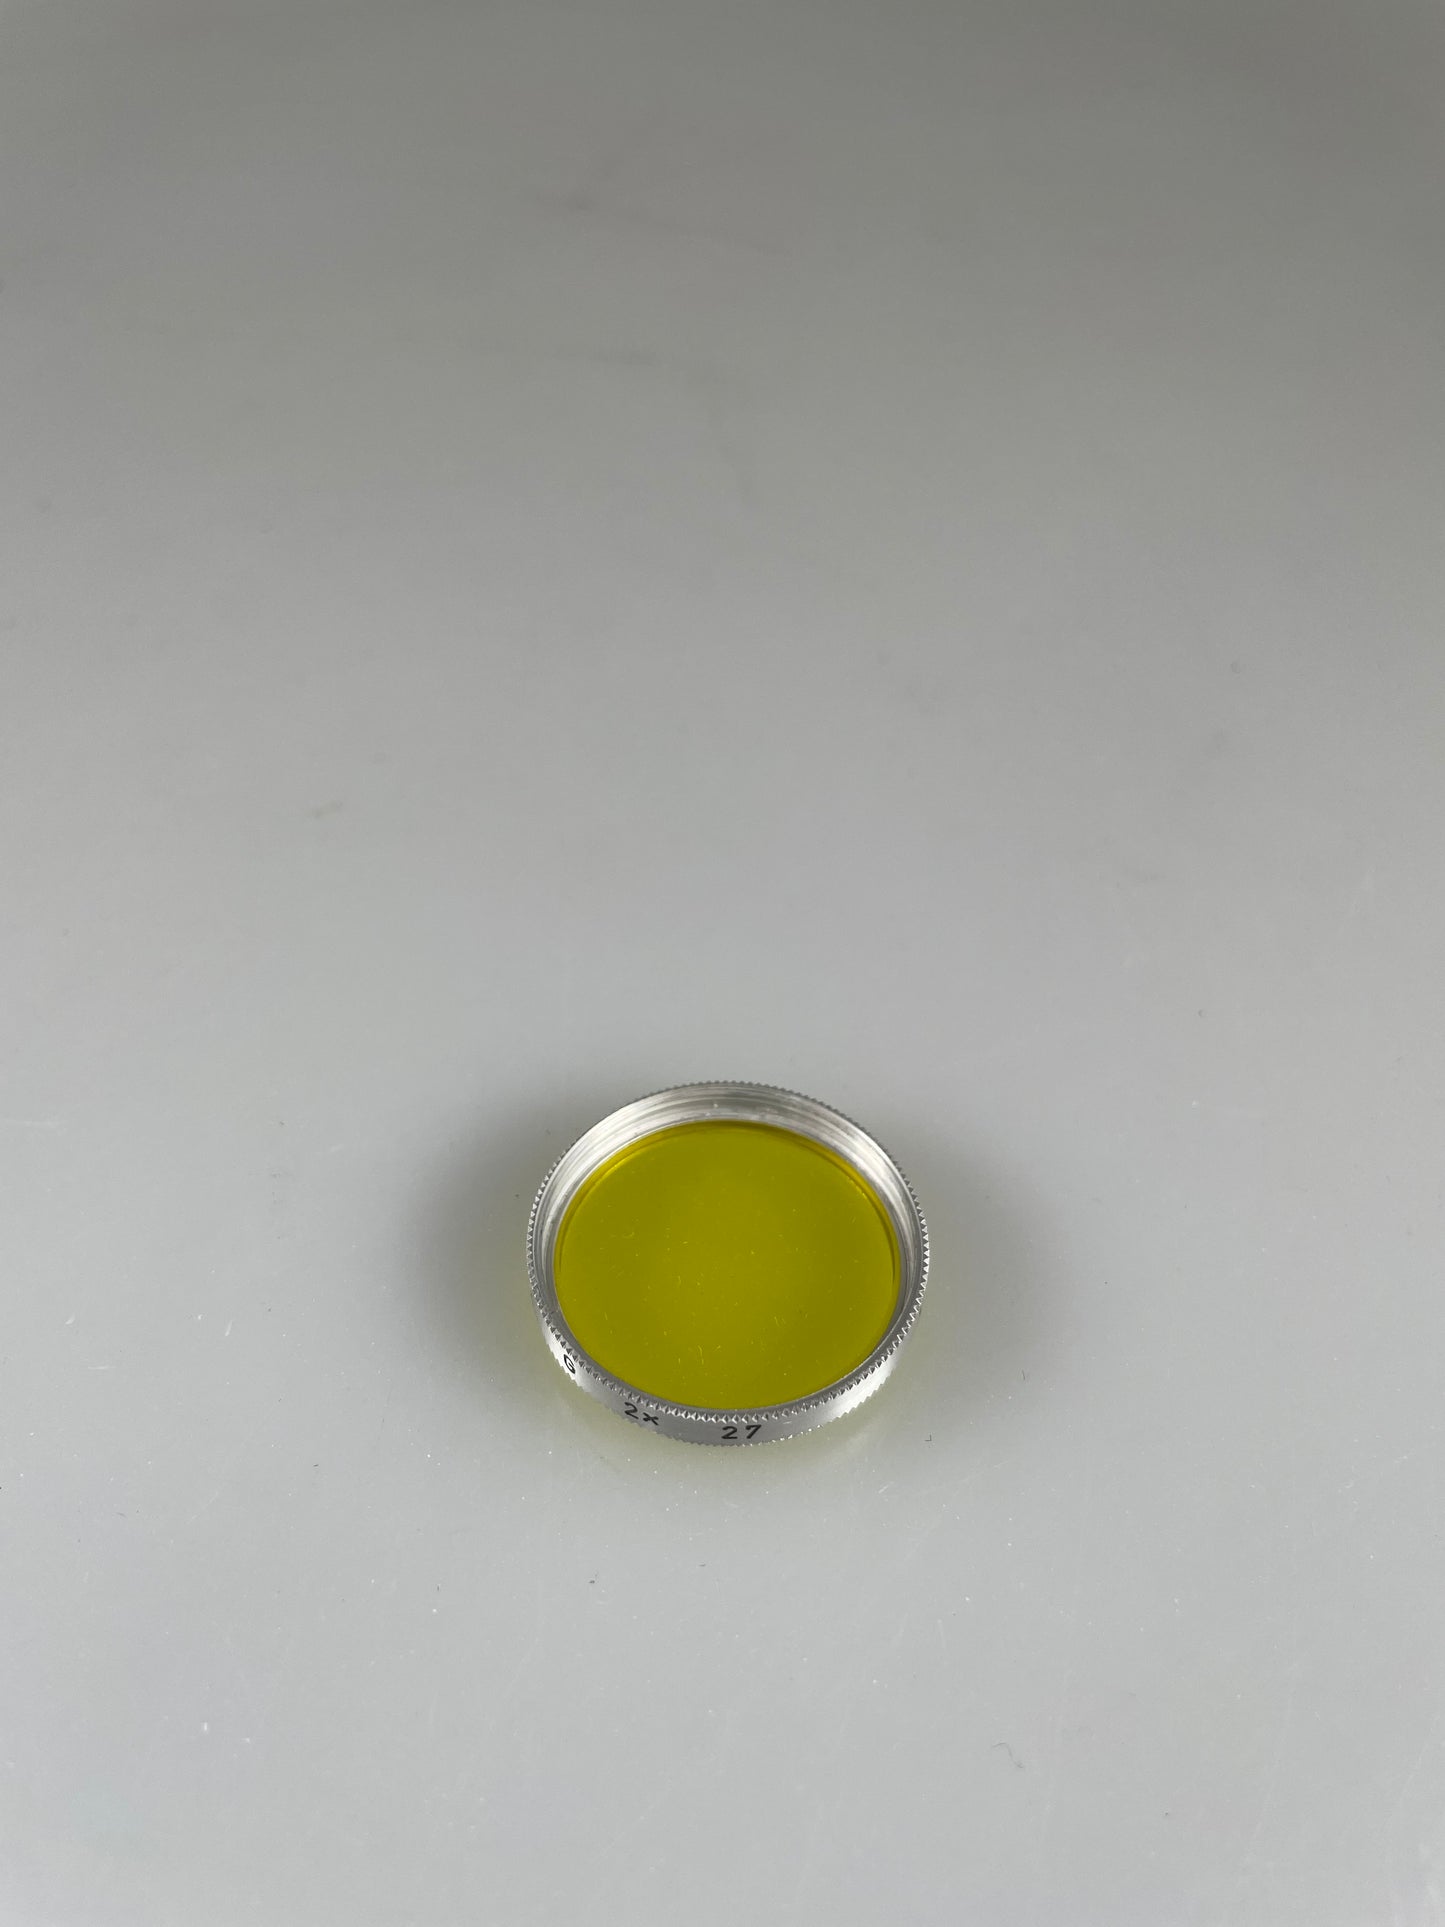 Zeiss Ikon S27 G Gelb Yellow G 2x -1 27mm Farbfilter